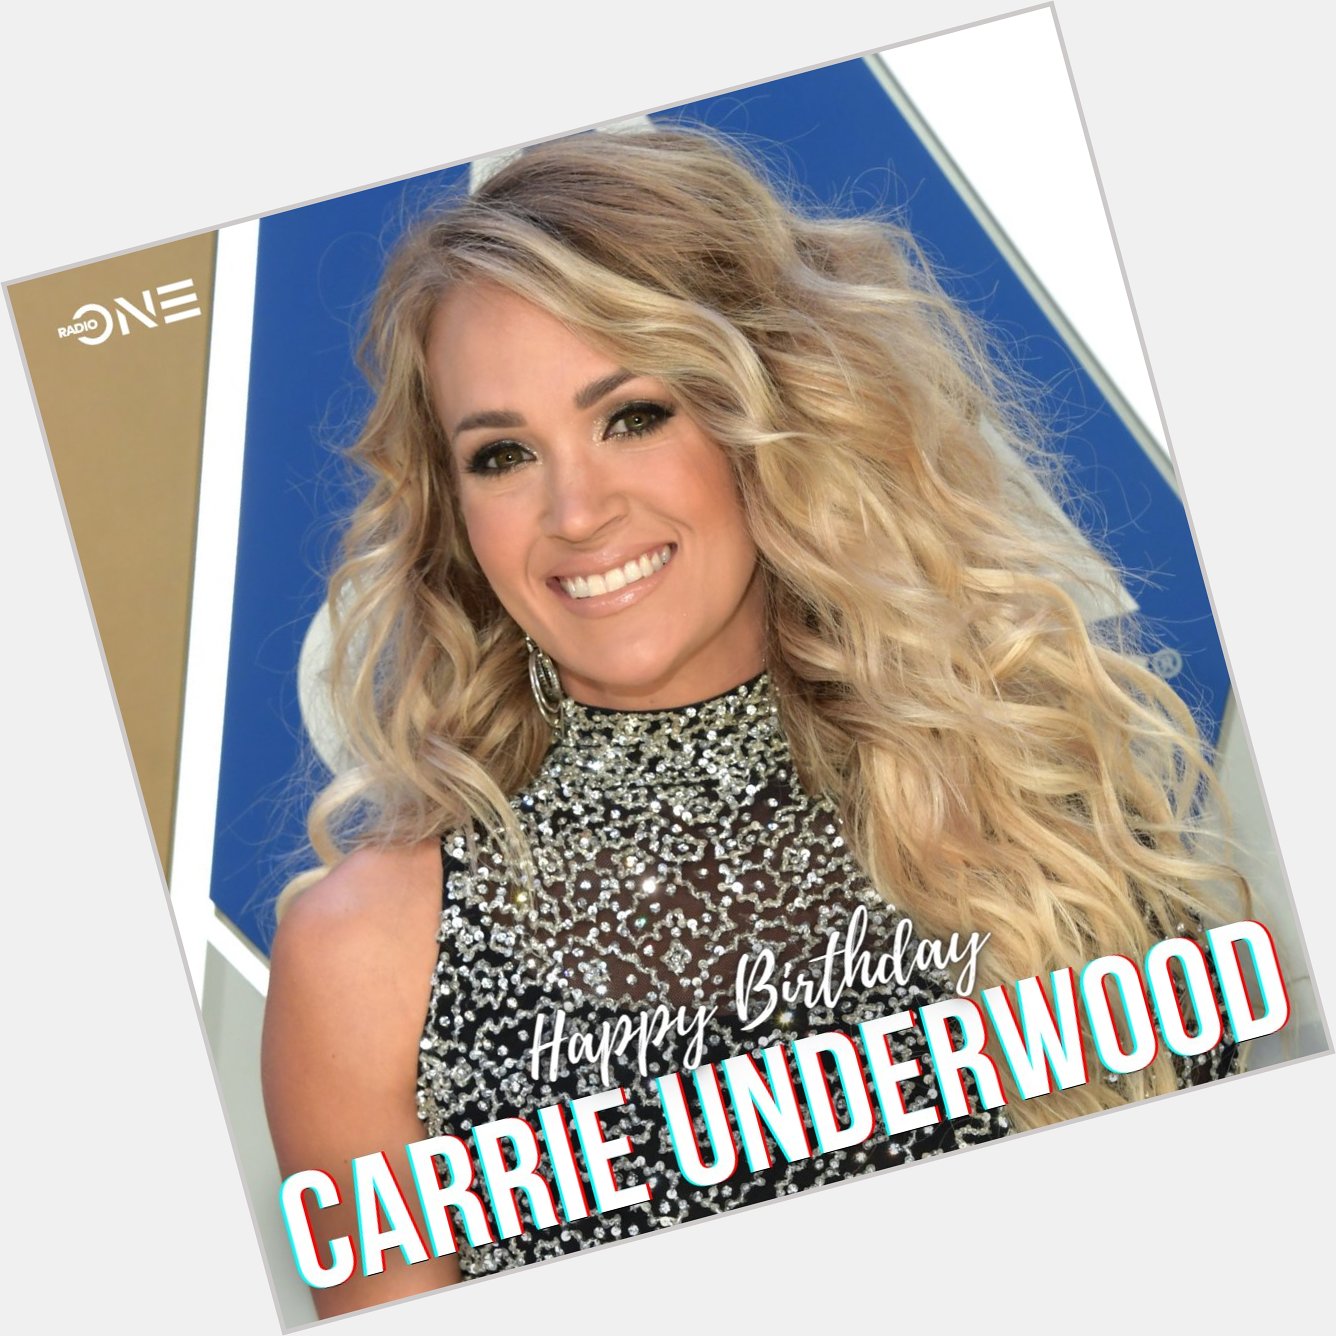 Wishing Carrie Underwood a happy 38th birthday 